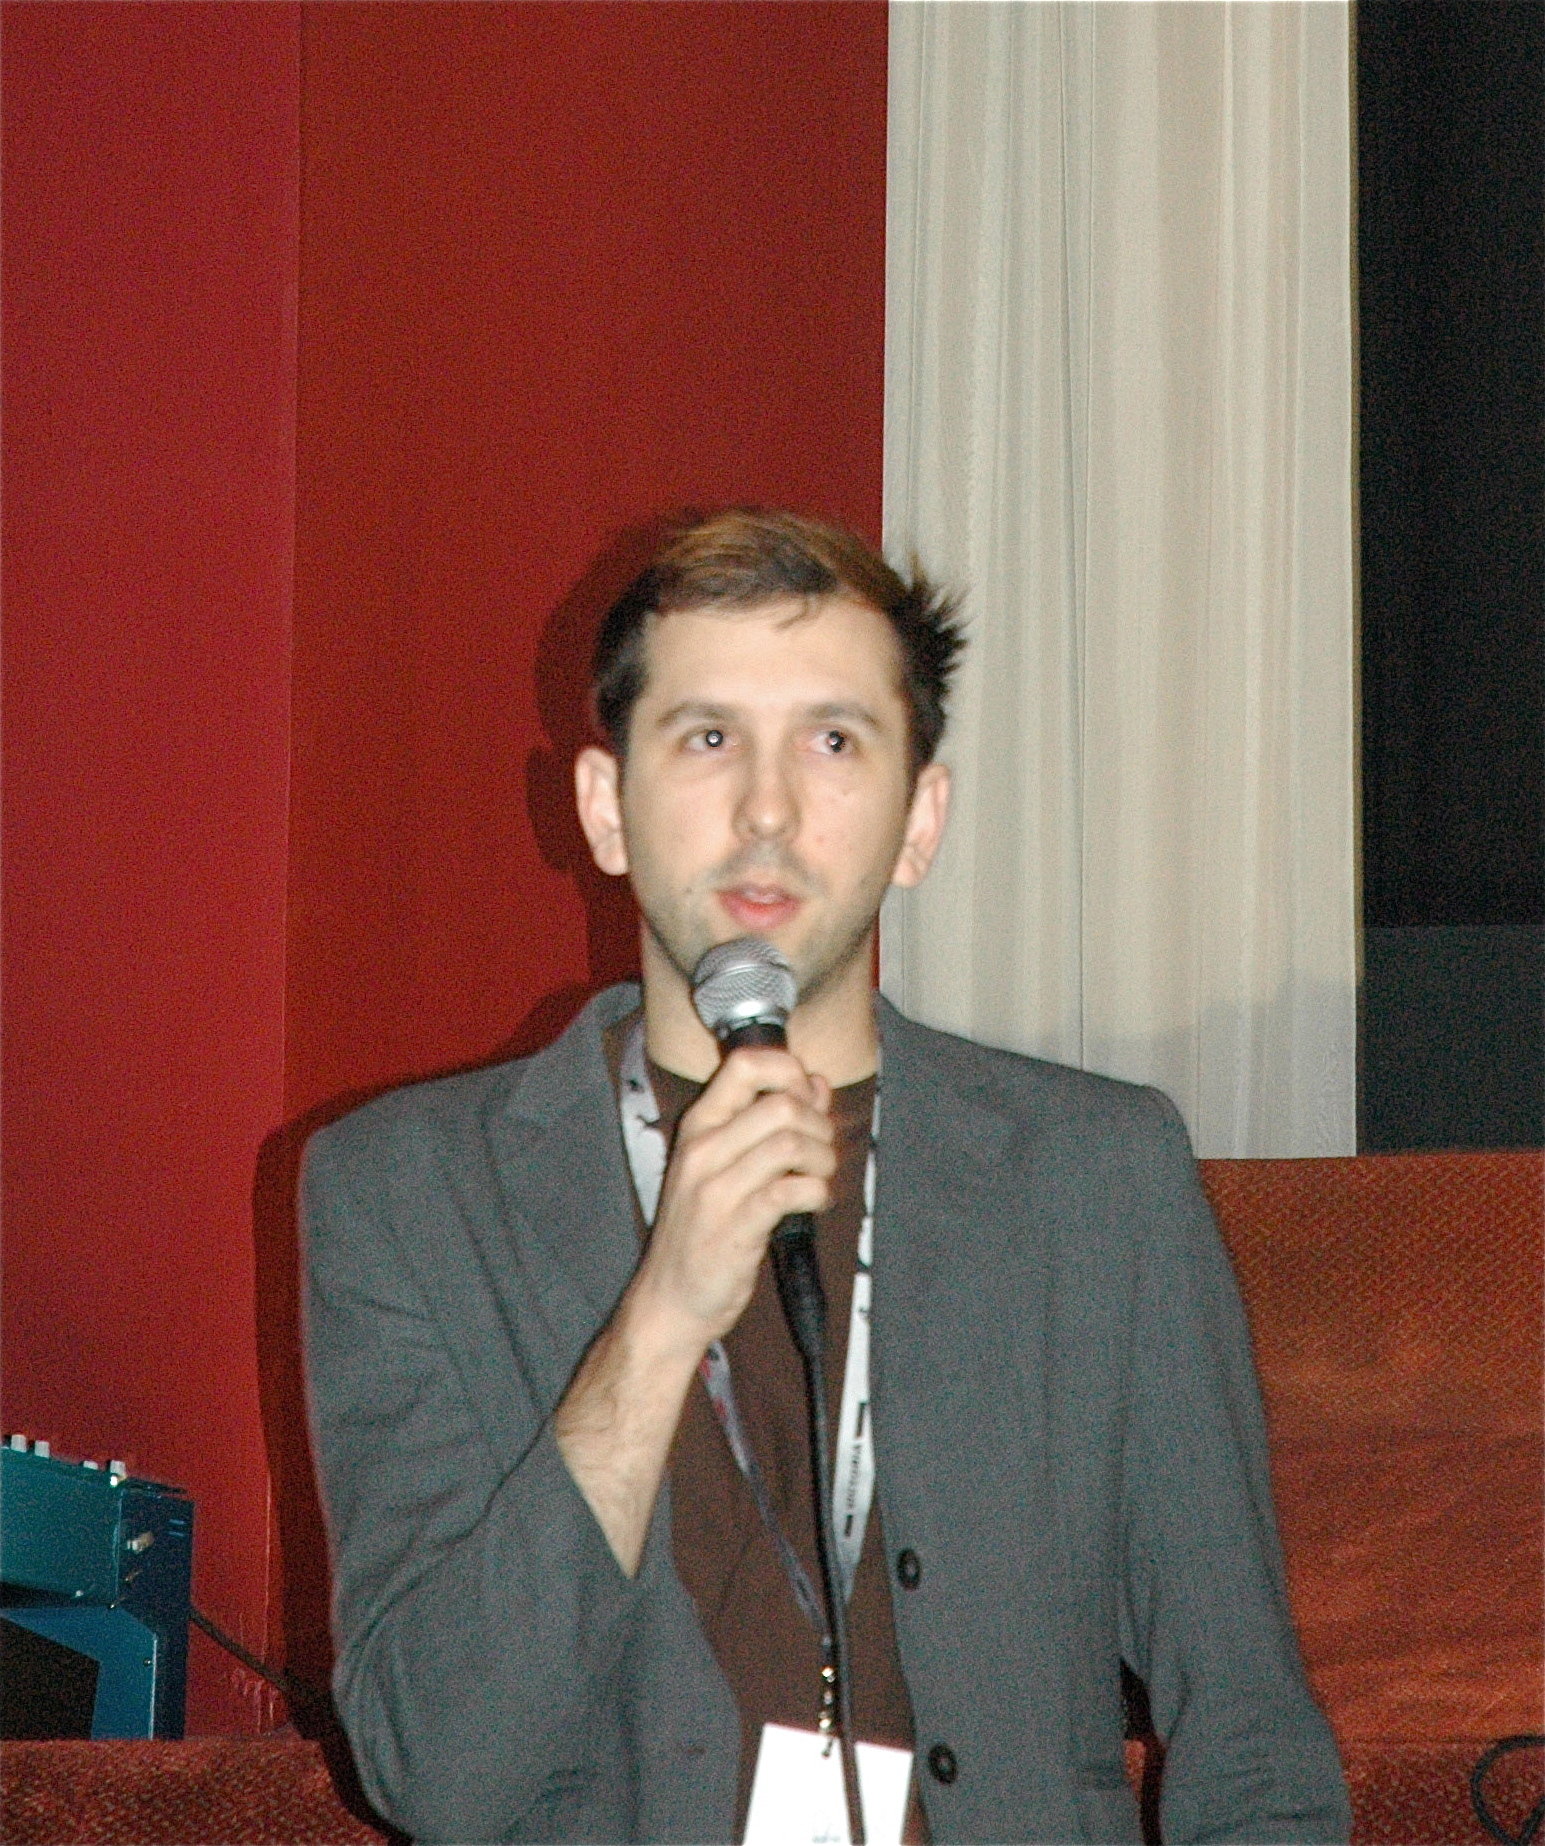 Mike Ott at the 2007 Indie Lisboa International Film Festival in Portugal.